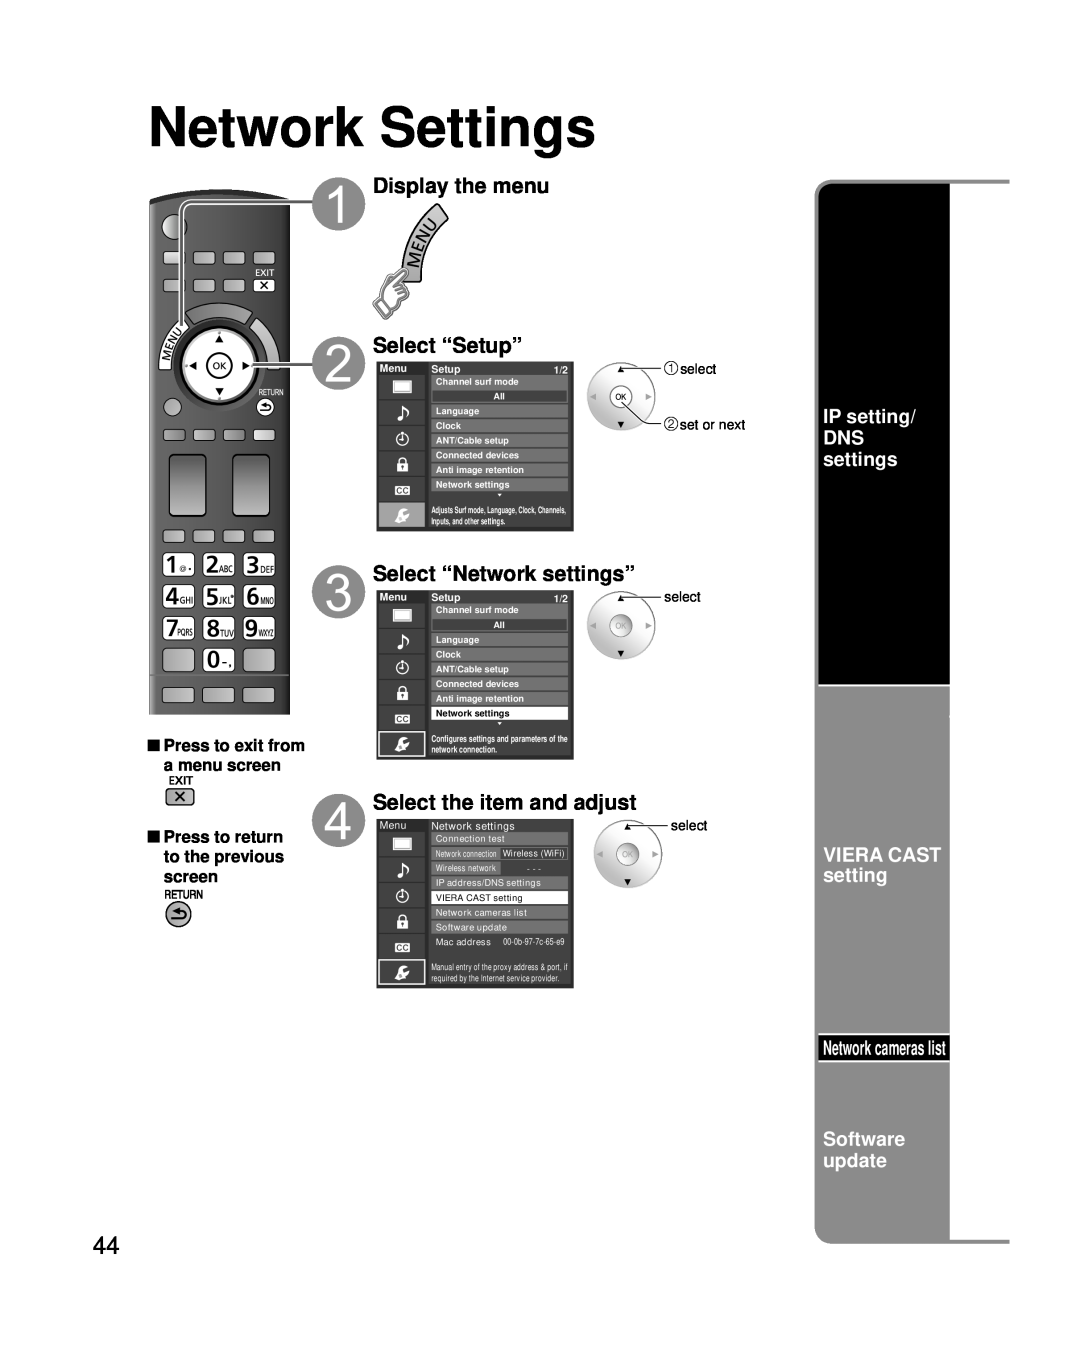 Panasonic TC-P42G25 Network Settings, IP setting DNS settings, VIERA CAST setting, Network cameras list Software update 